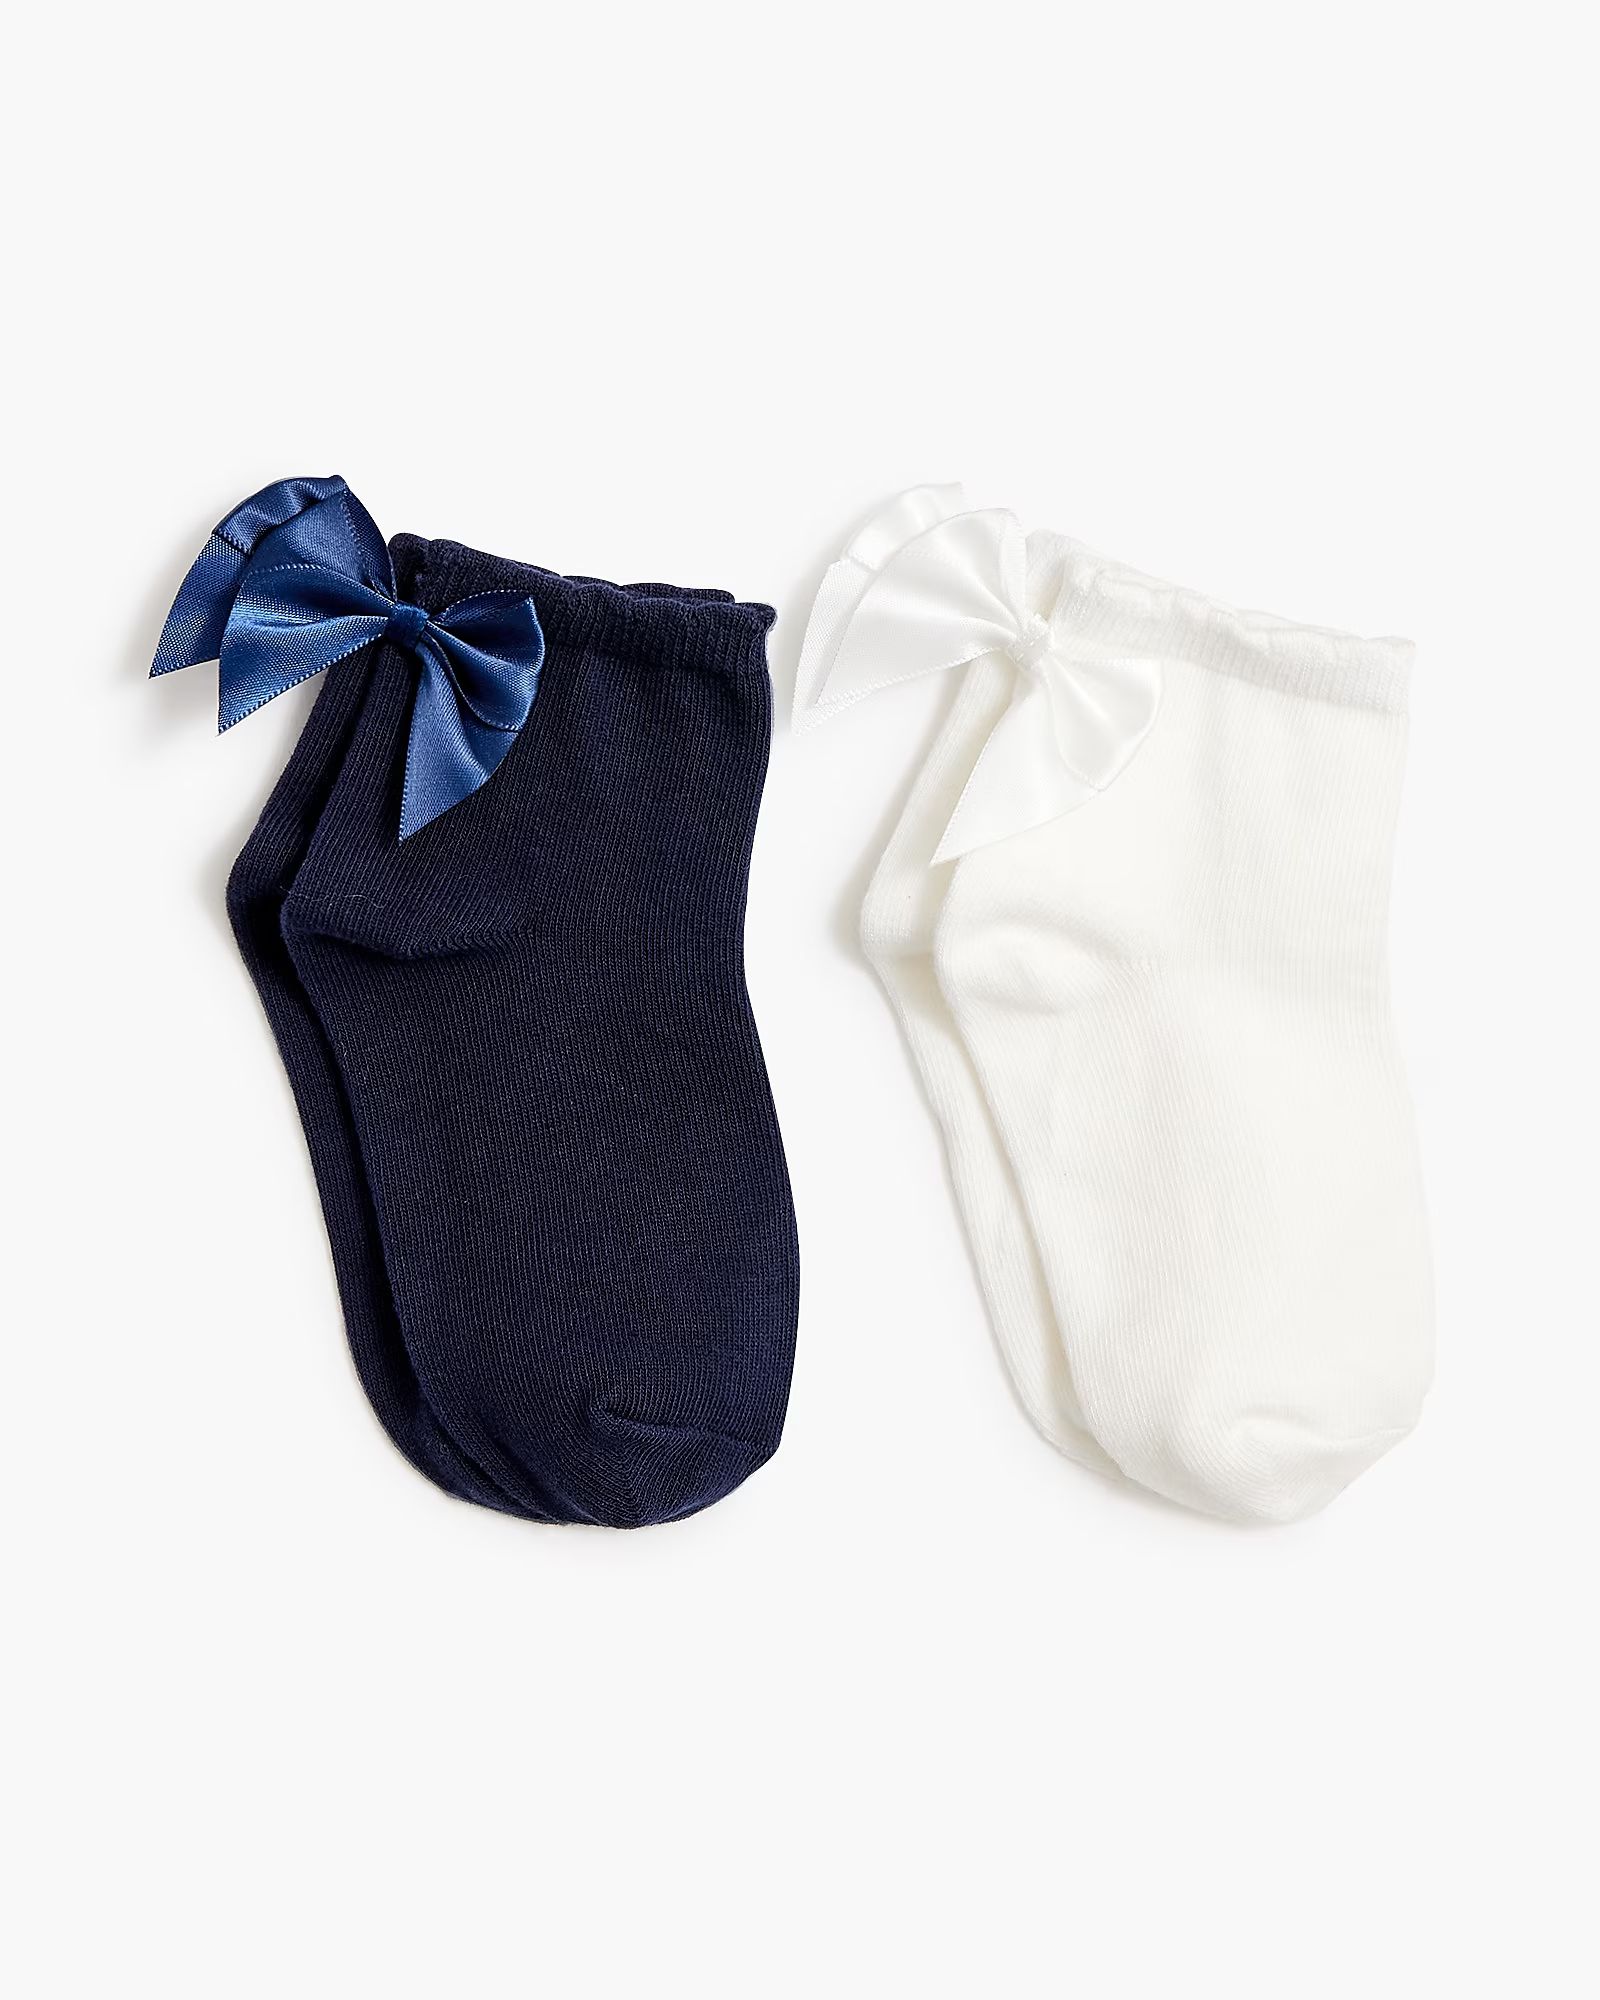 Girls' bow socks two-pack | J.Crew Factory